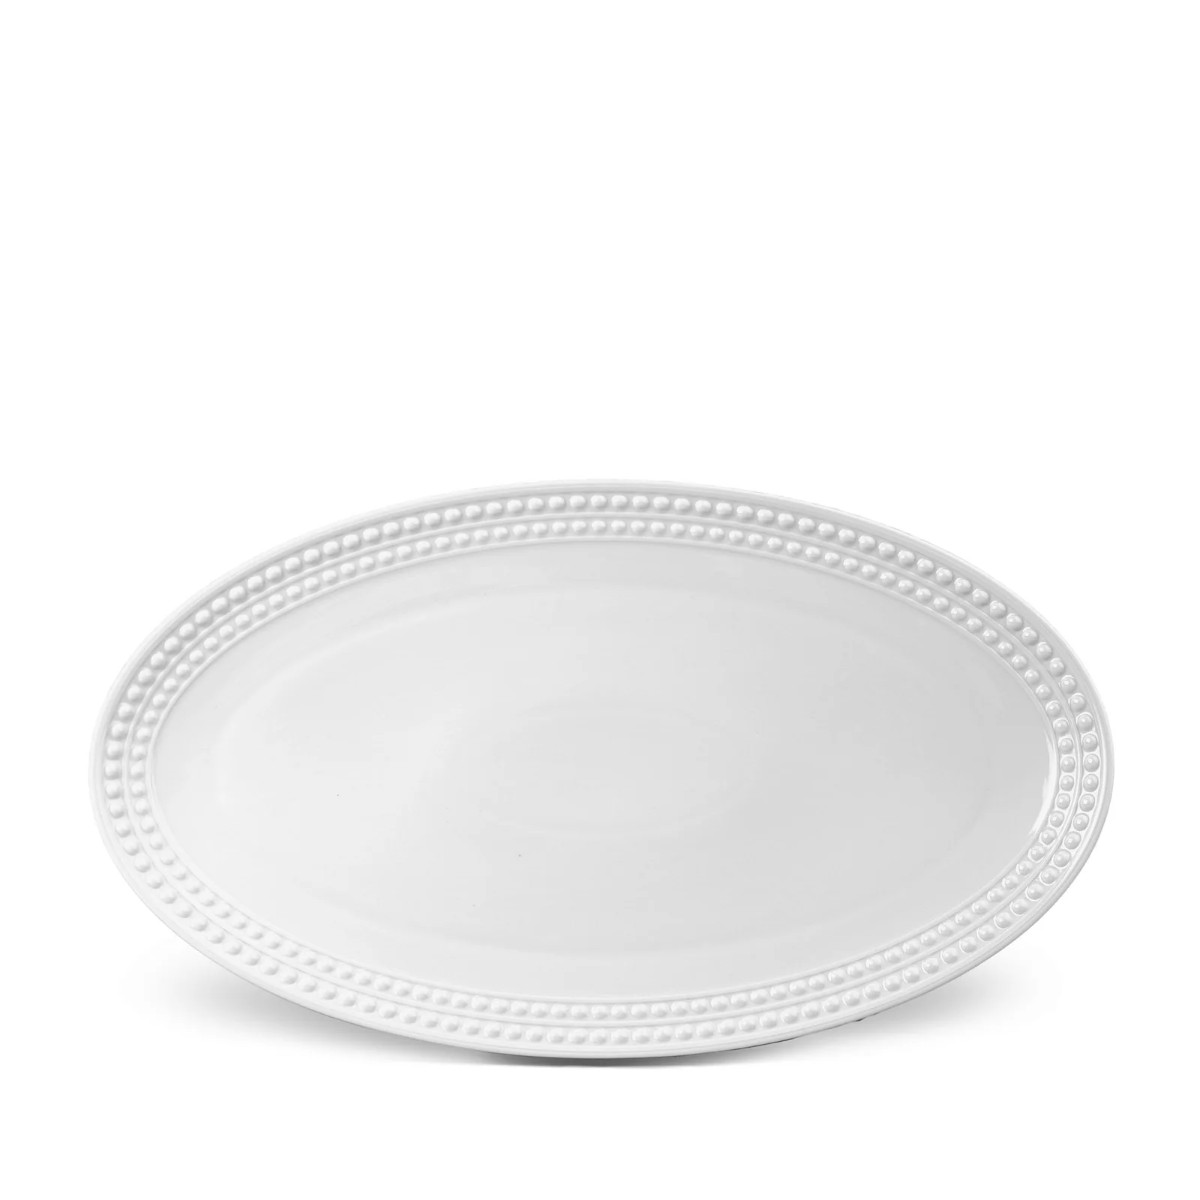 L’Objet | Perlee Oval Platter - Large | White